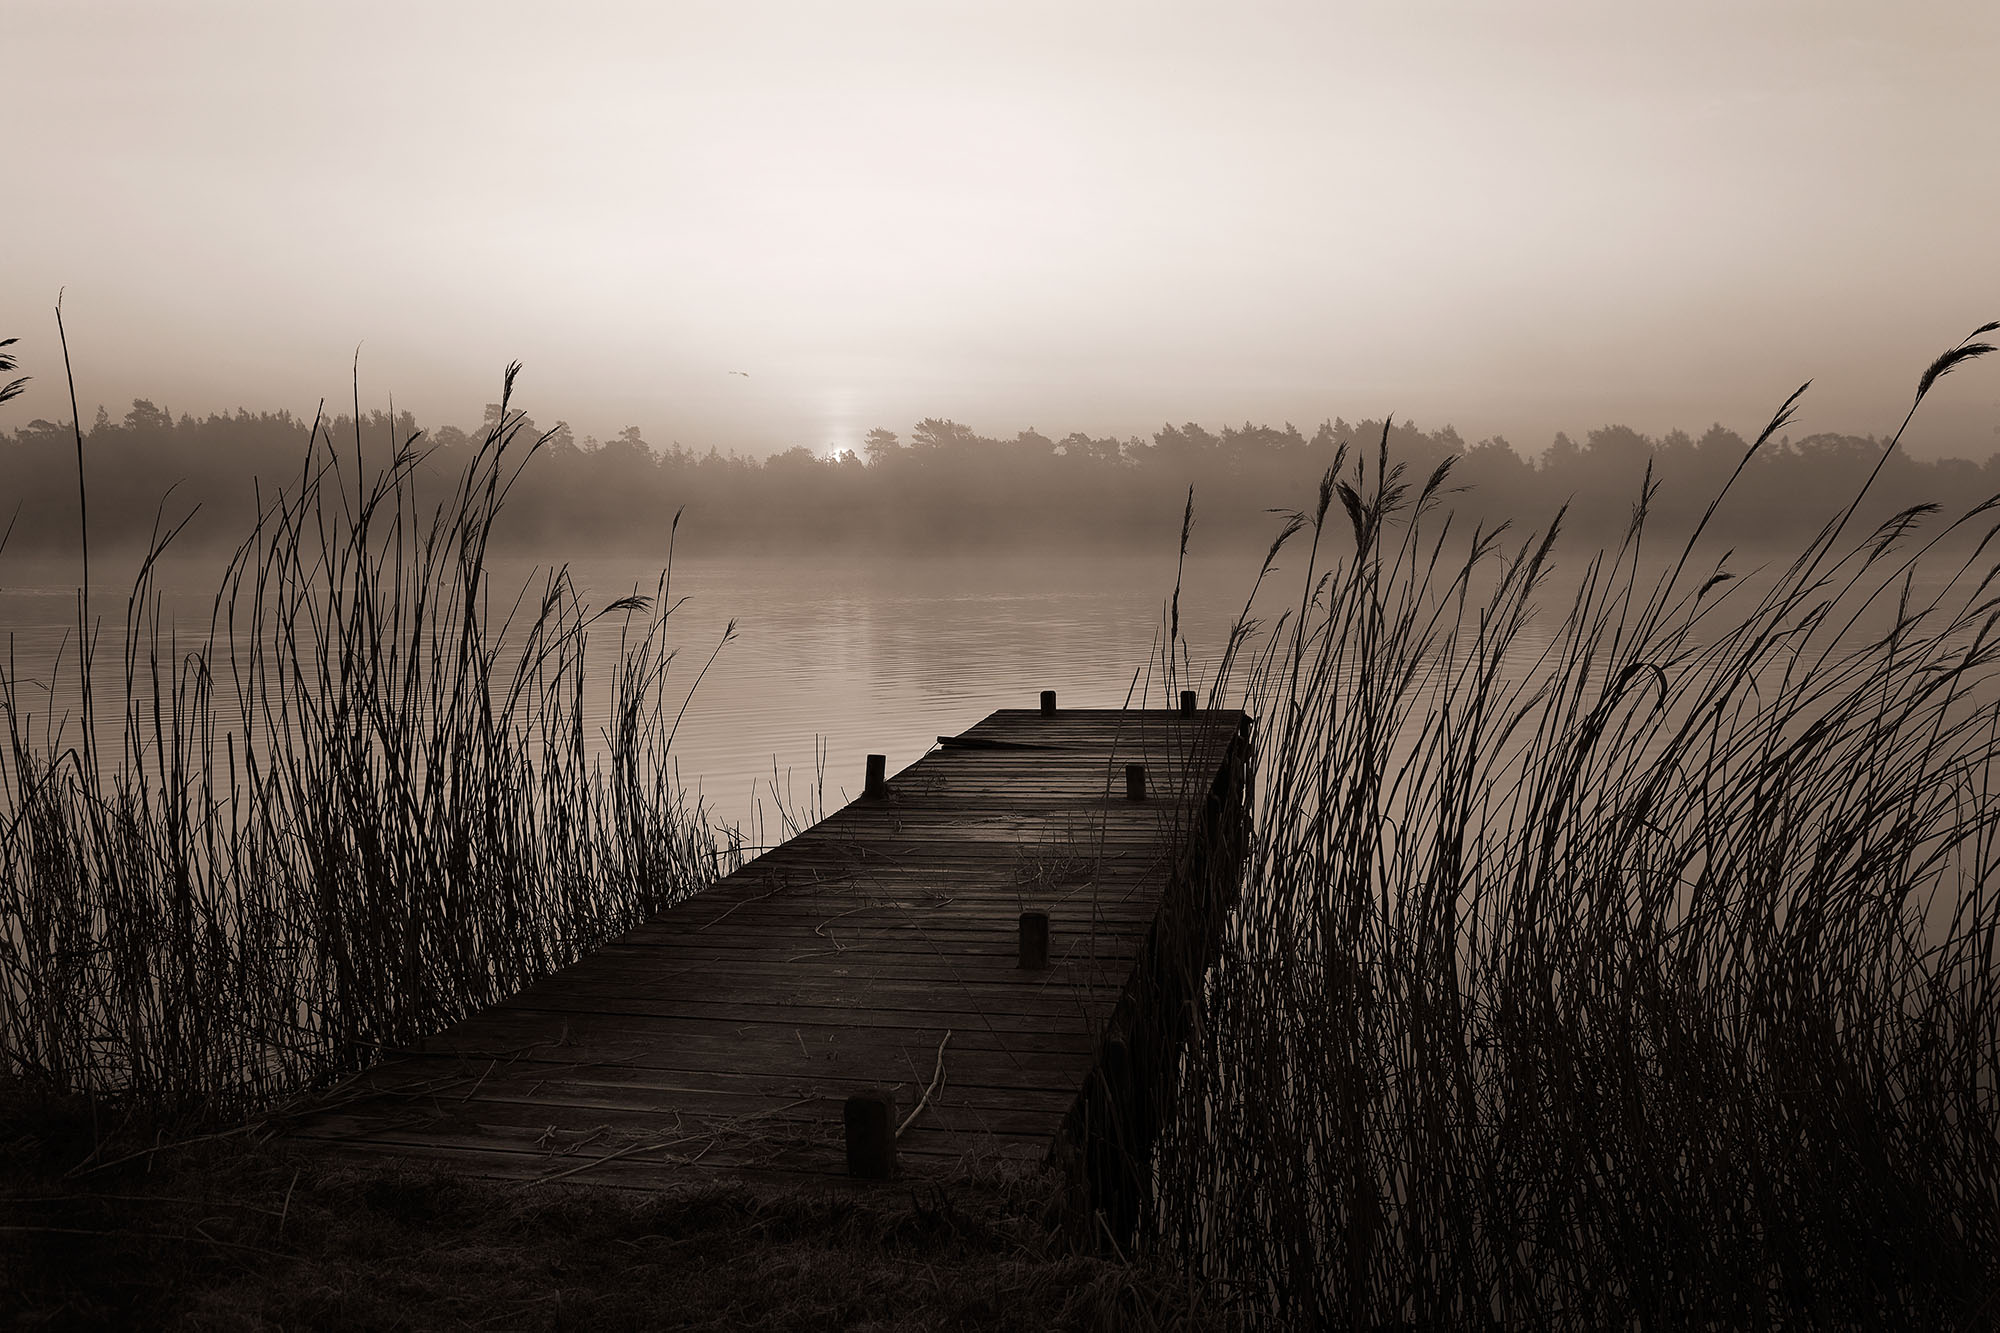 Se Misty Lake hos Picment.dk